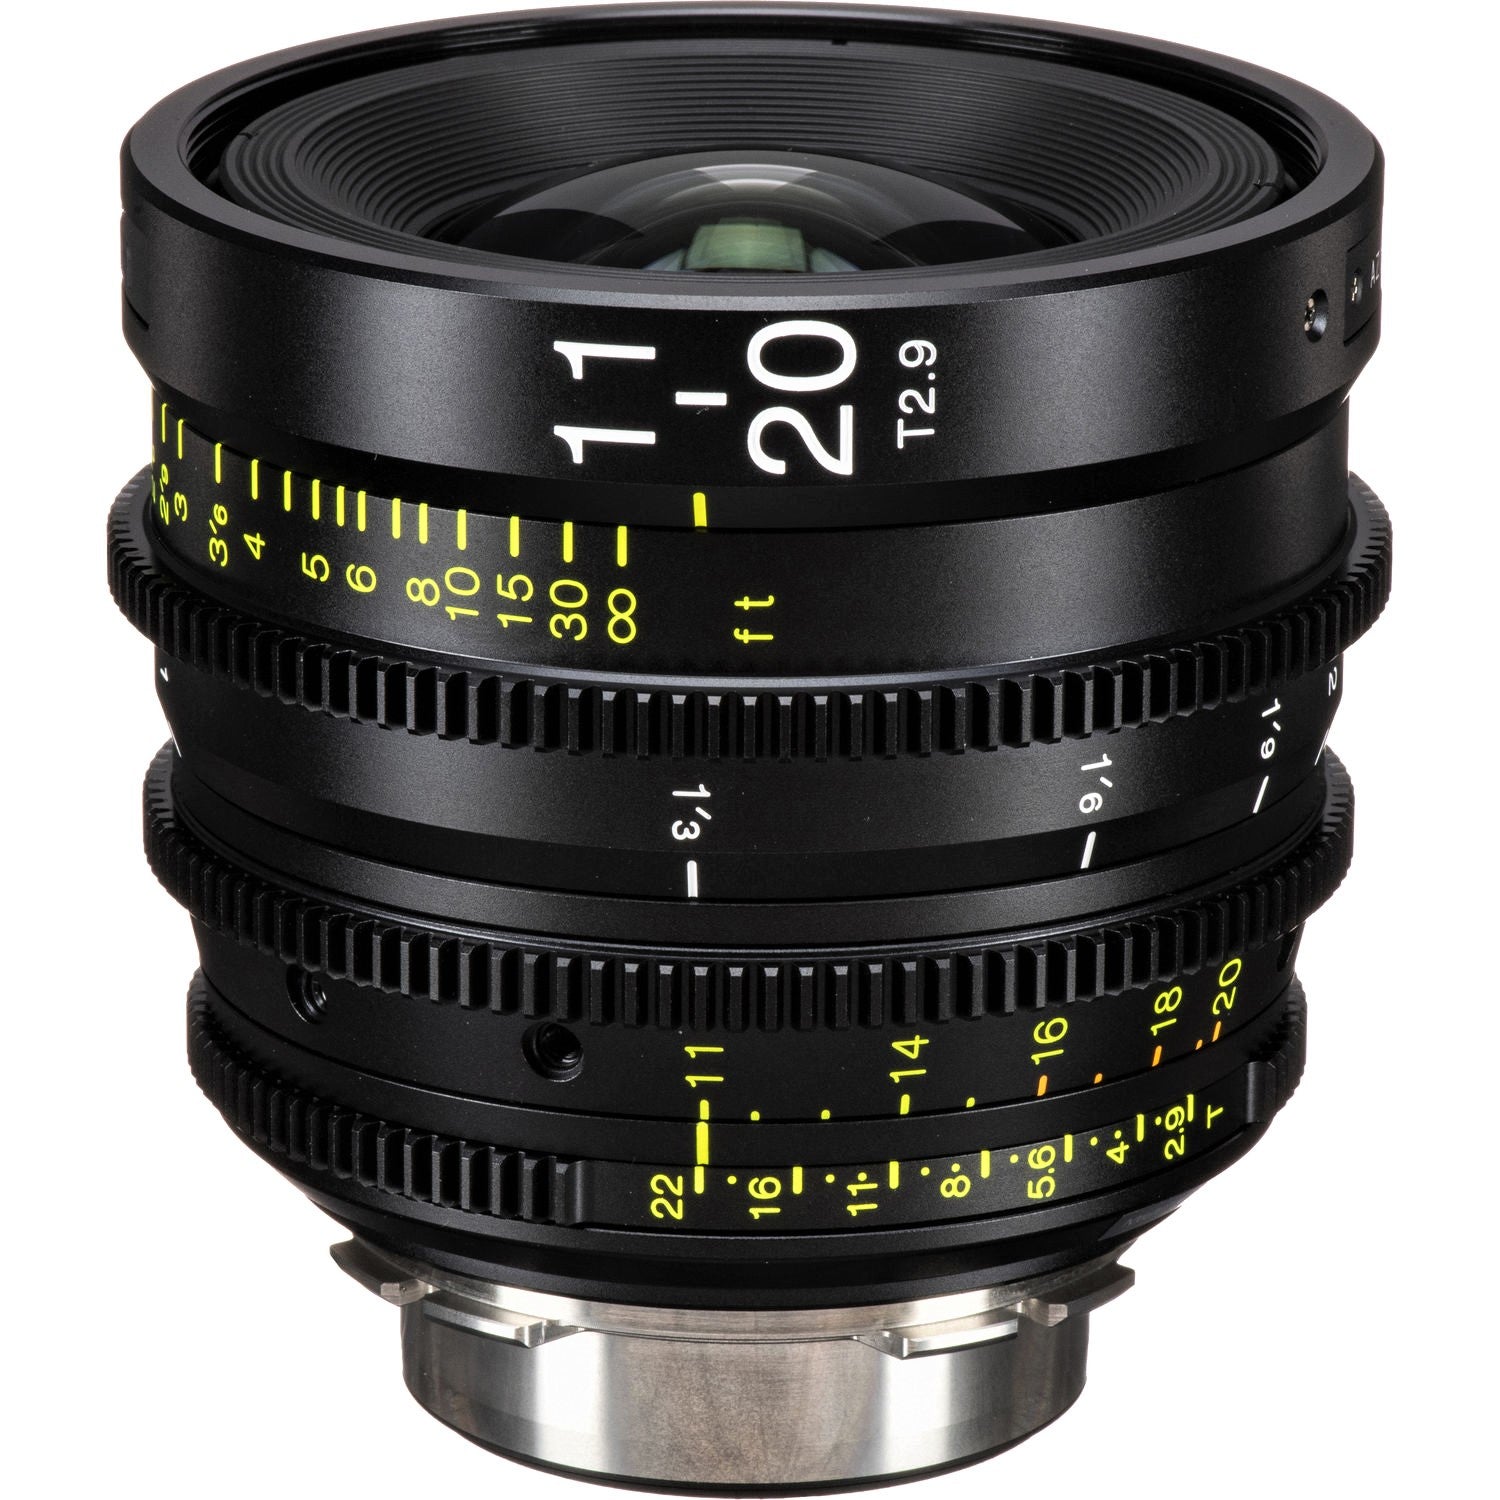 Tokina Cinema ATX 11-20mm T2.9 Wide-Angle Zoom Lens for EF Mount